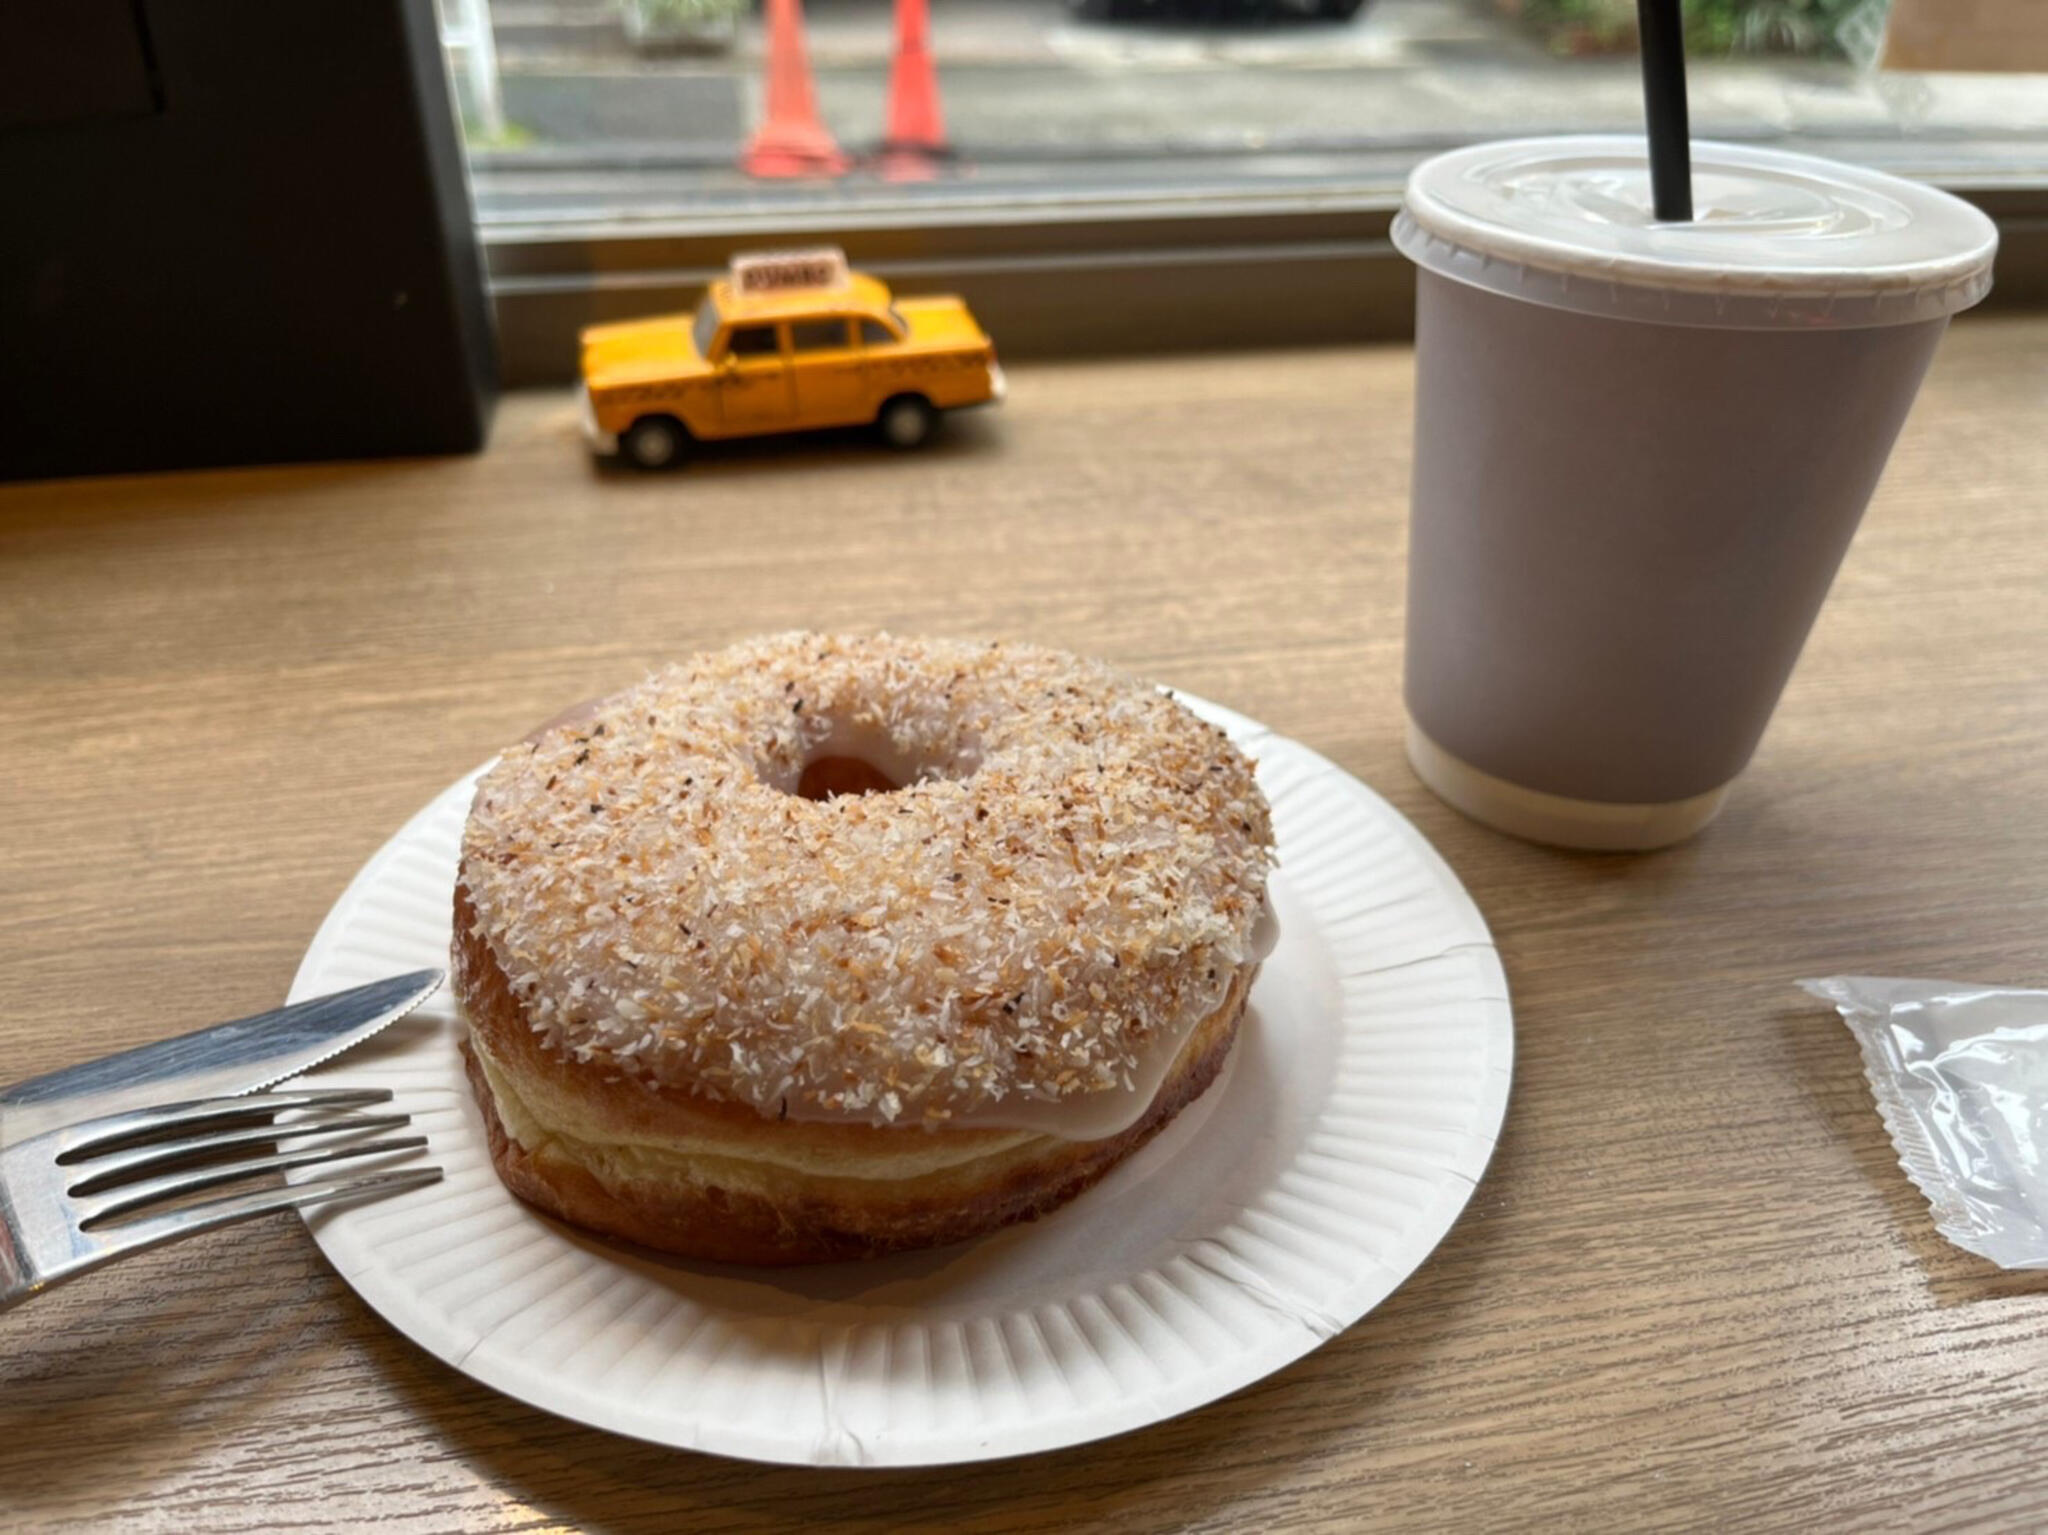 DUMBO Doughnuts and Coffeeの代表写真4